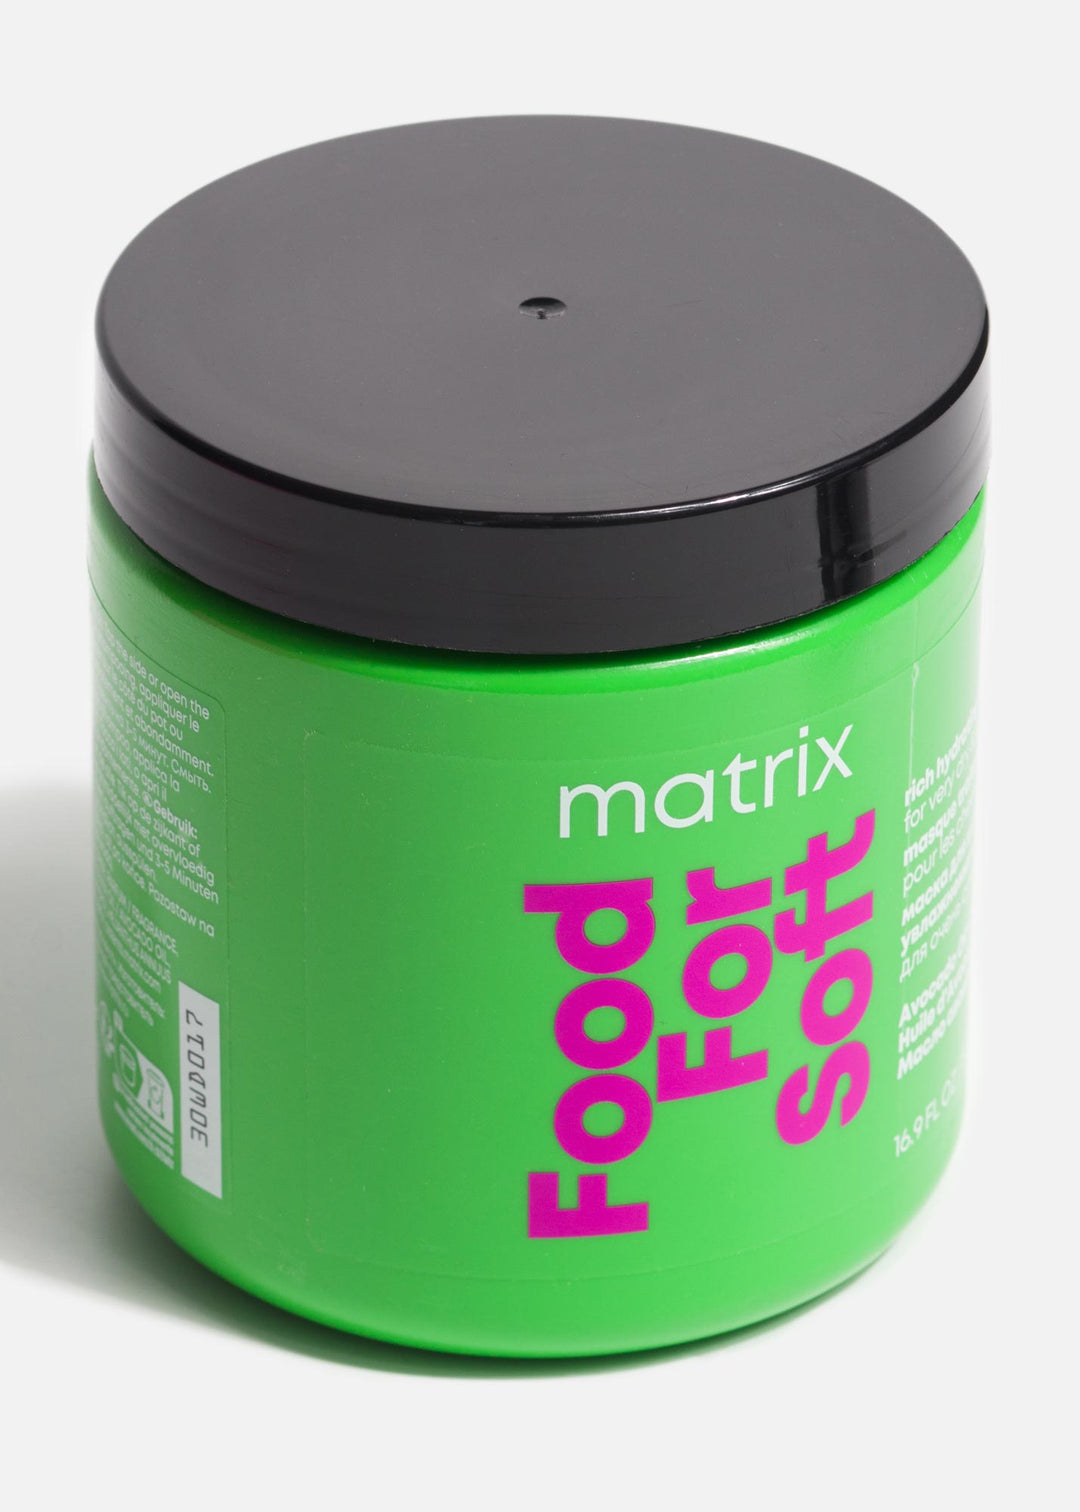 beneficios matrix hidratante cabelle romanamx